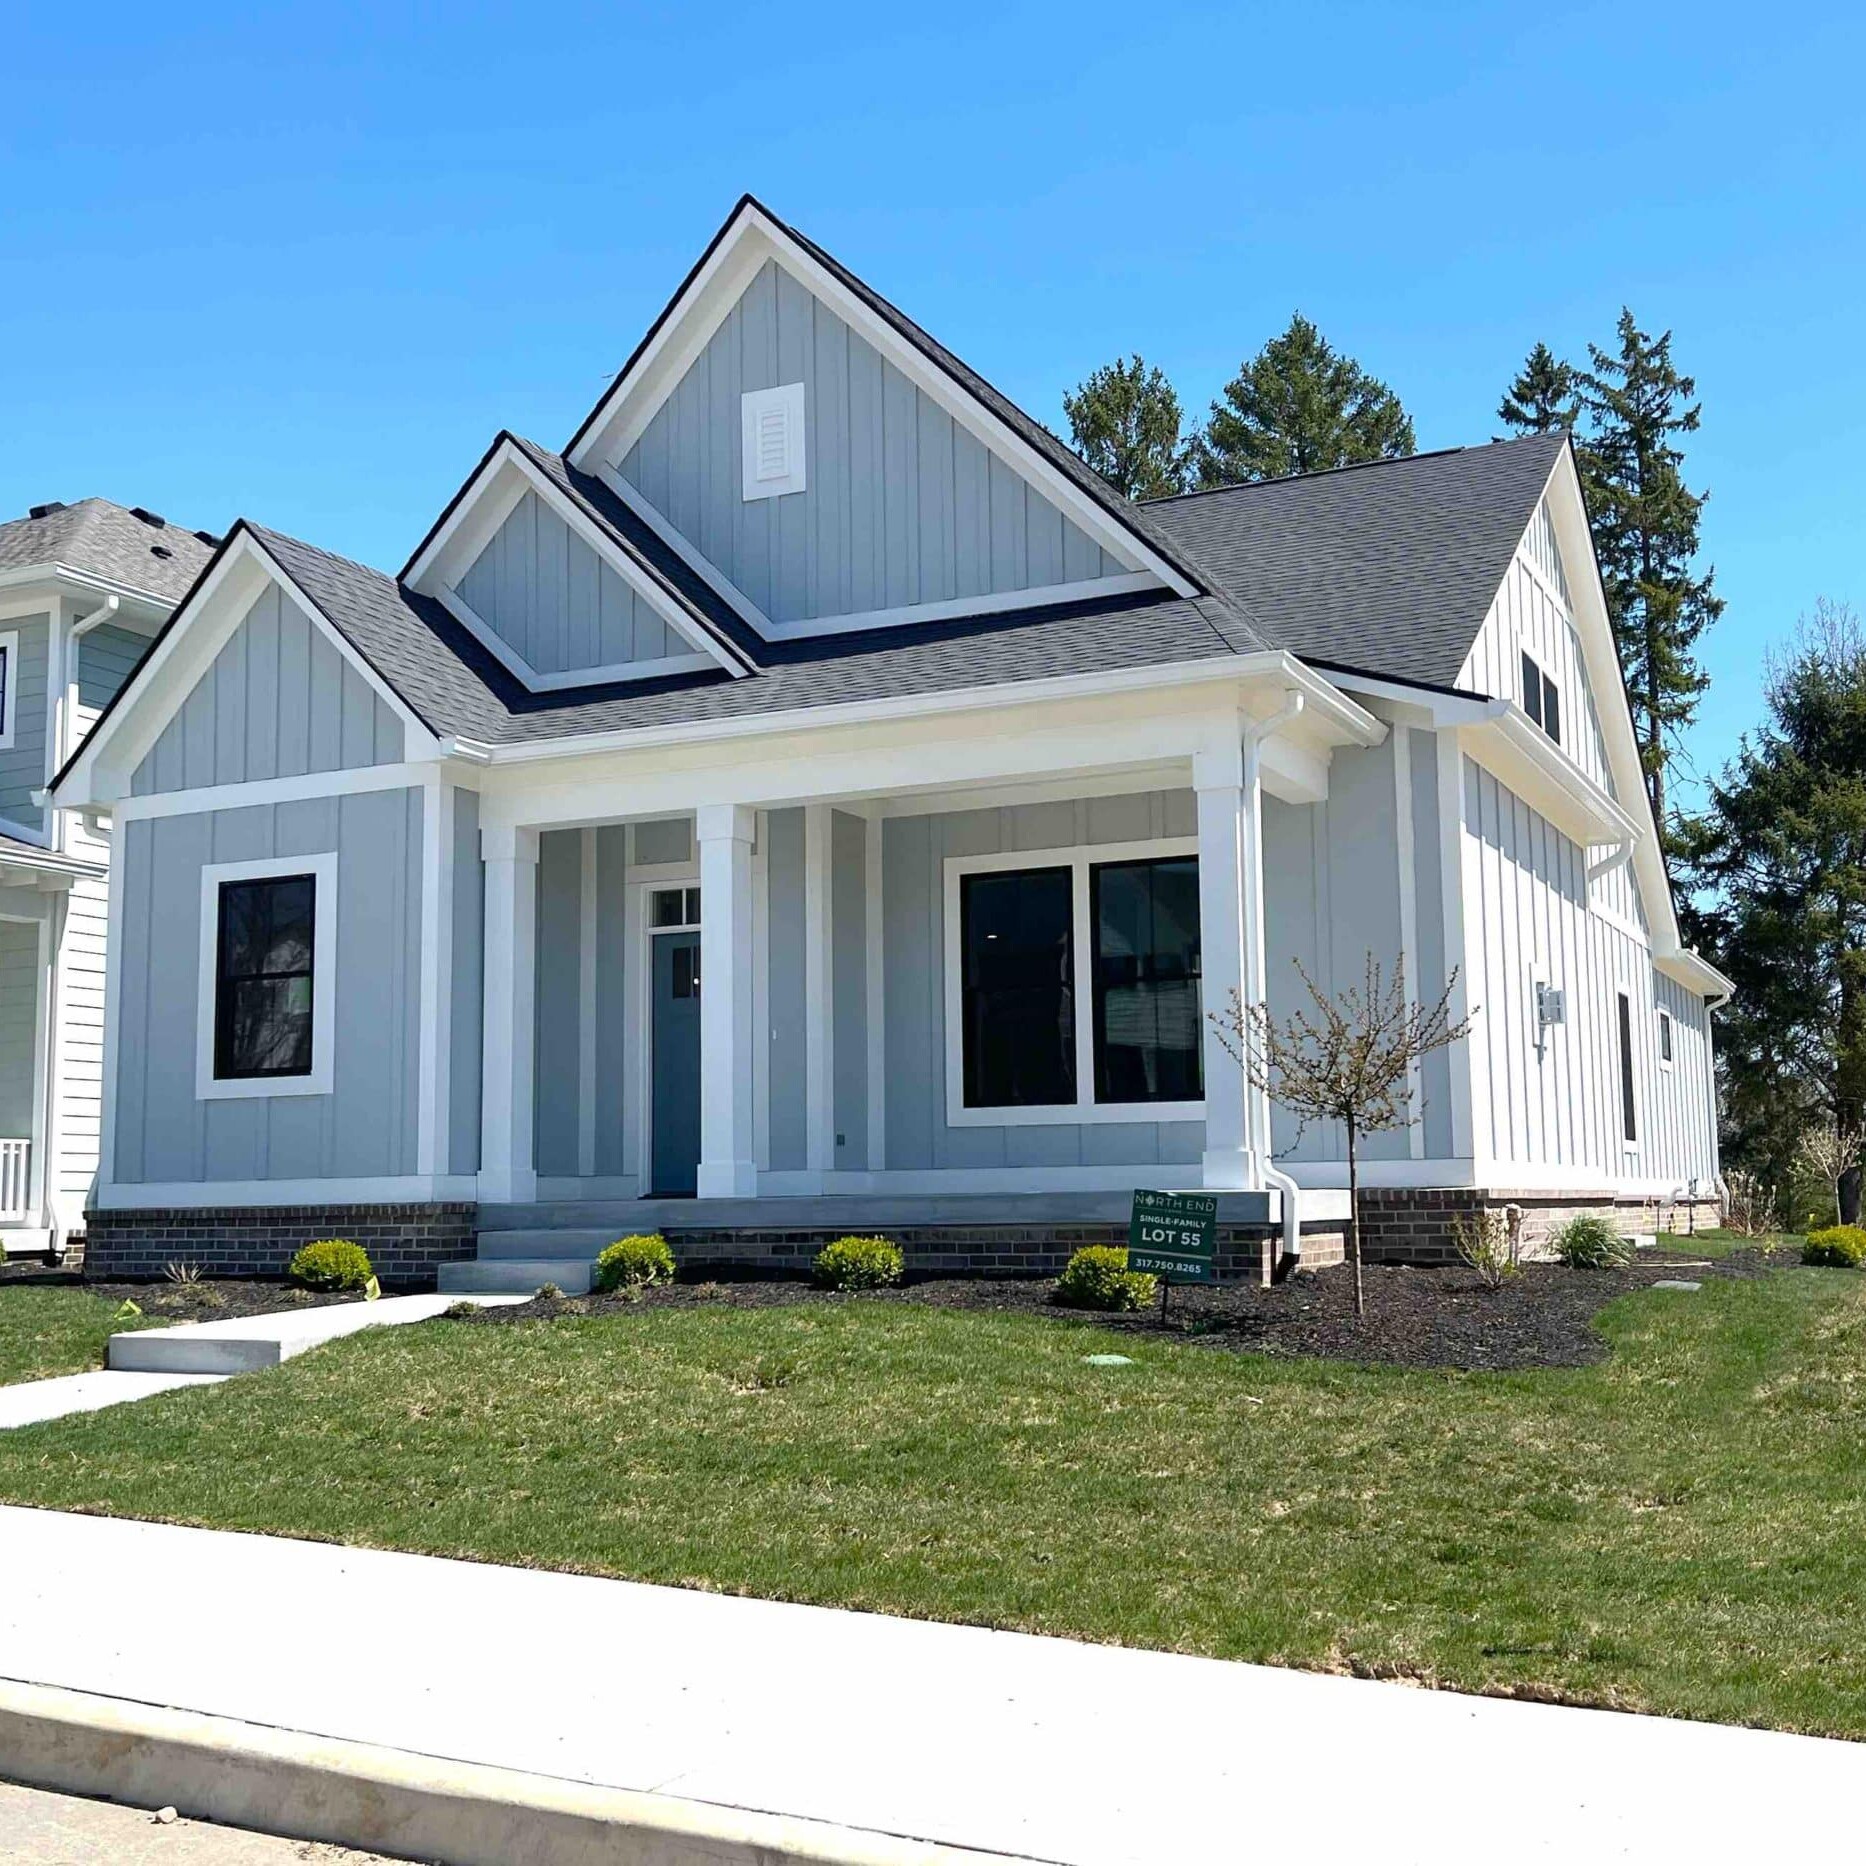 A custom-built two story home in a suburban neighborhood.